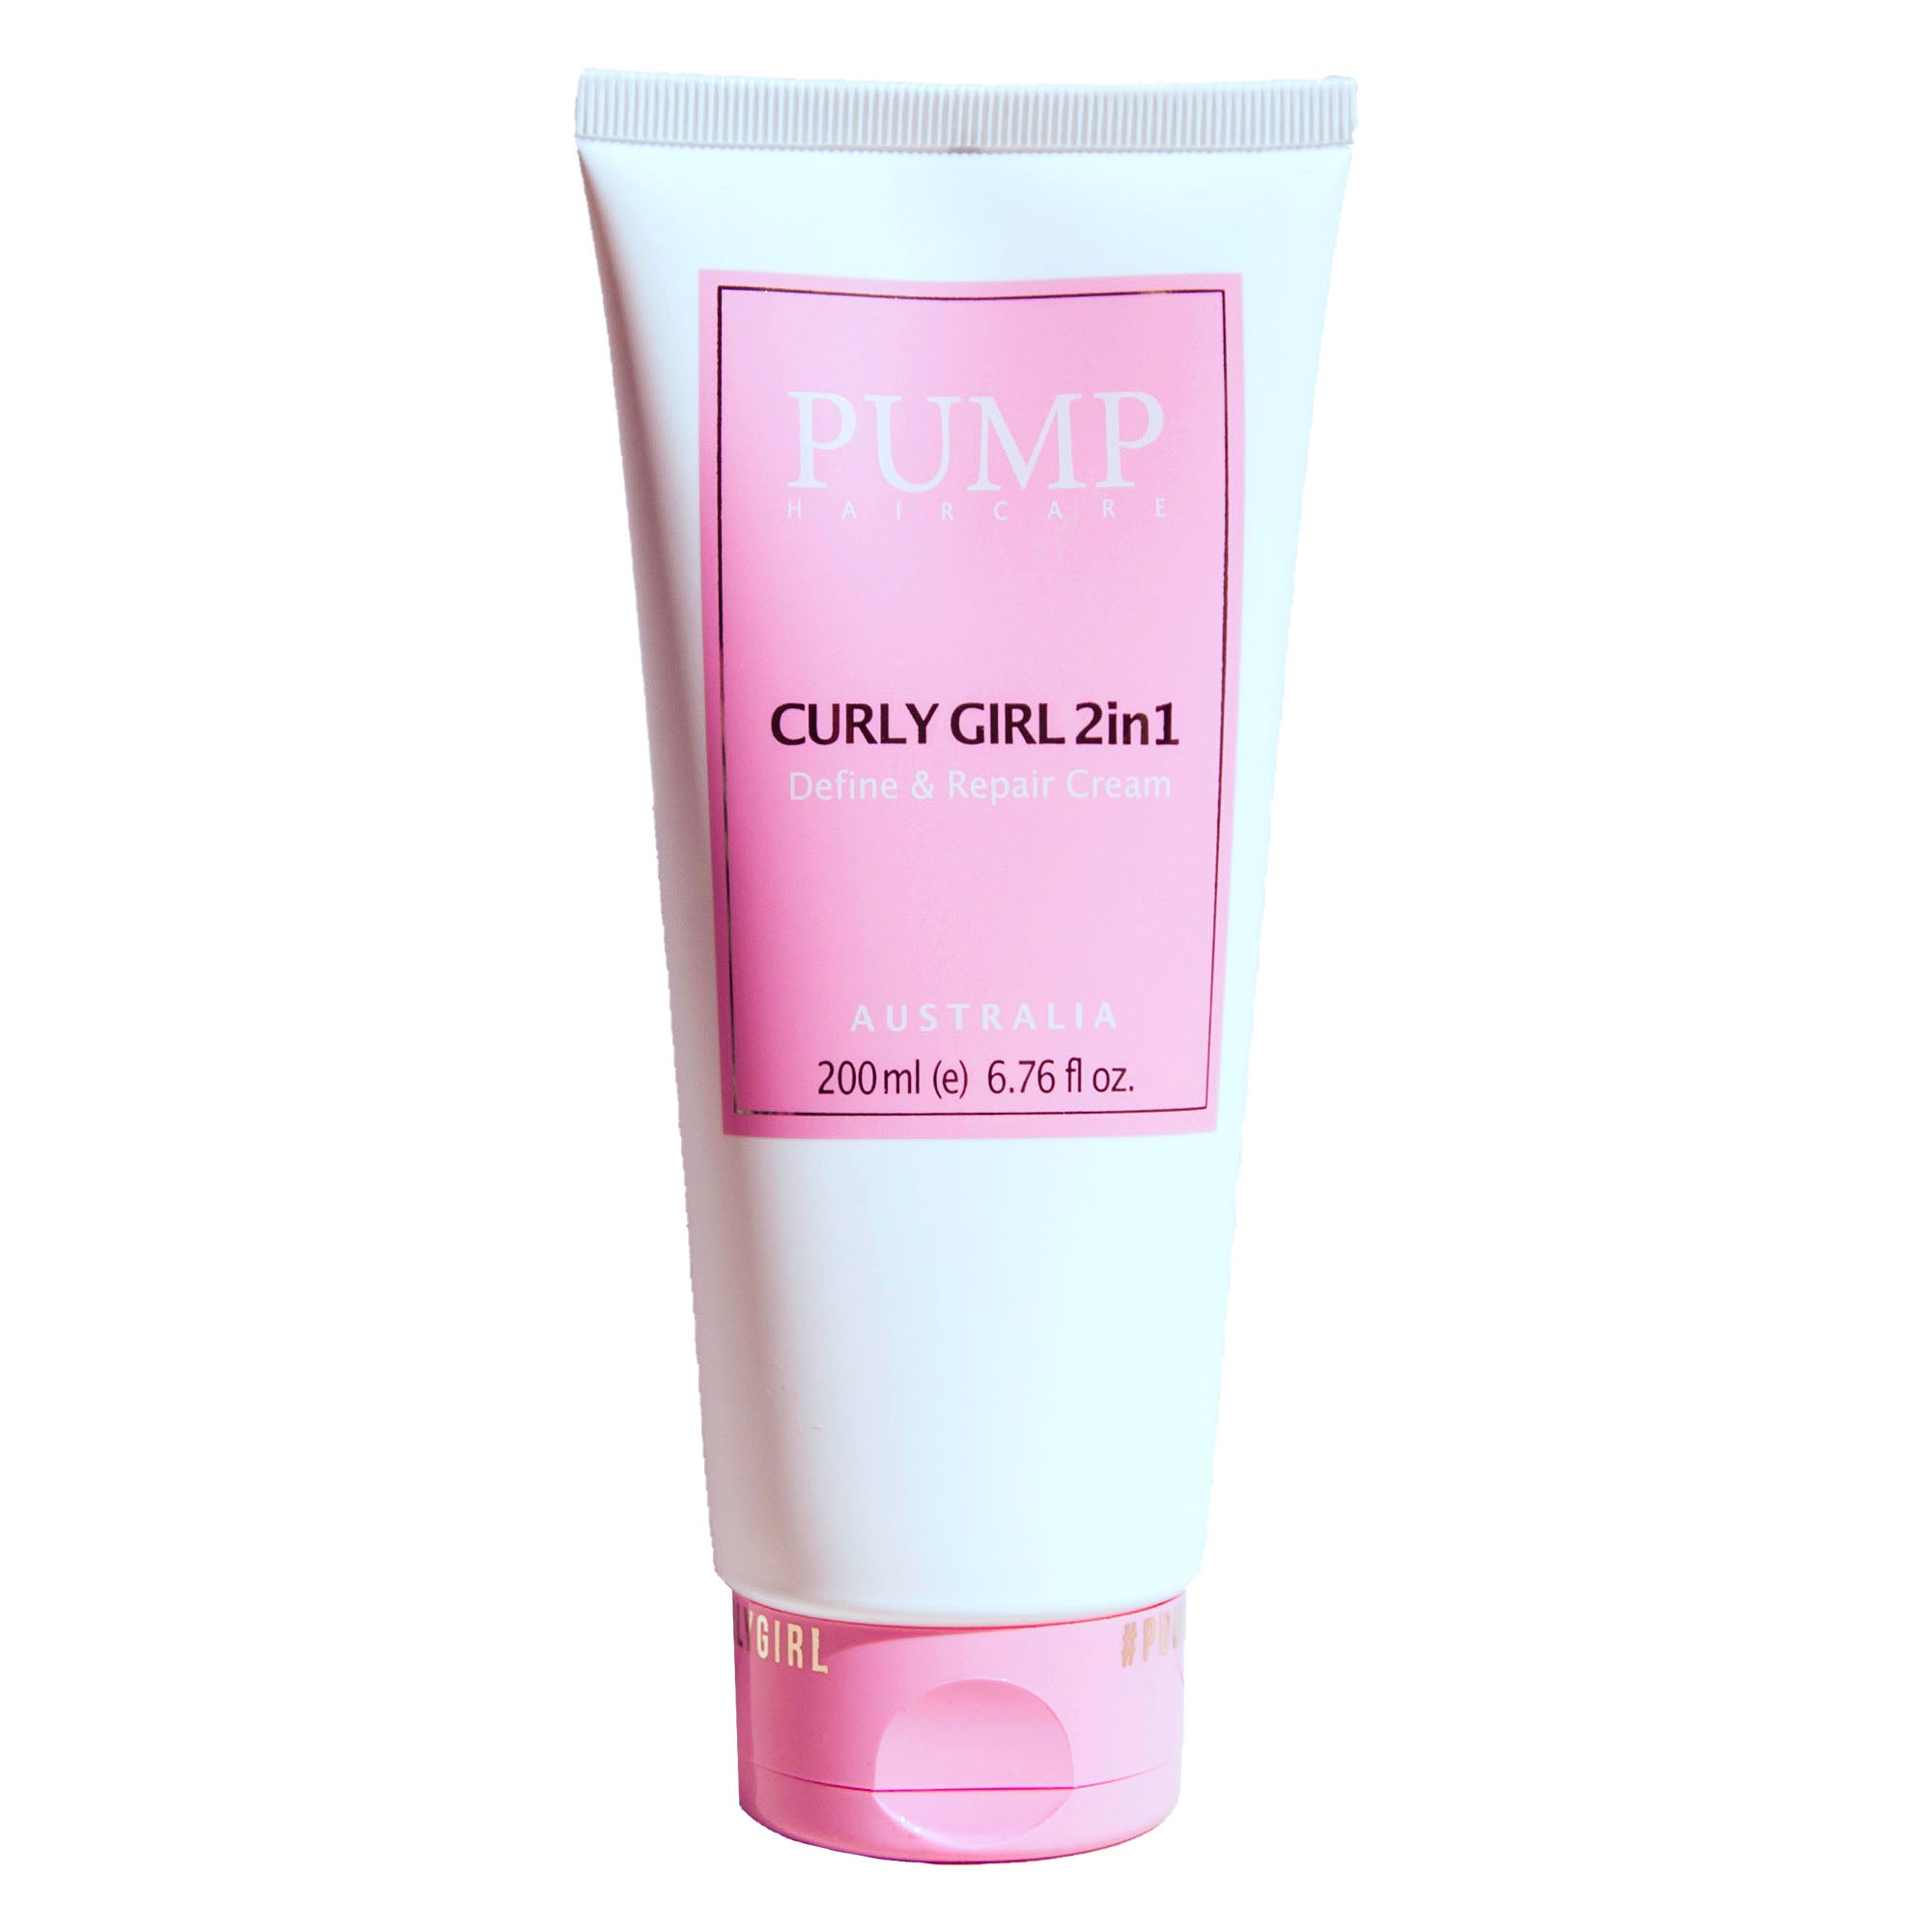 Pump Curly Girl 2in1 Define and Repair Cream 200ml